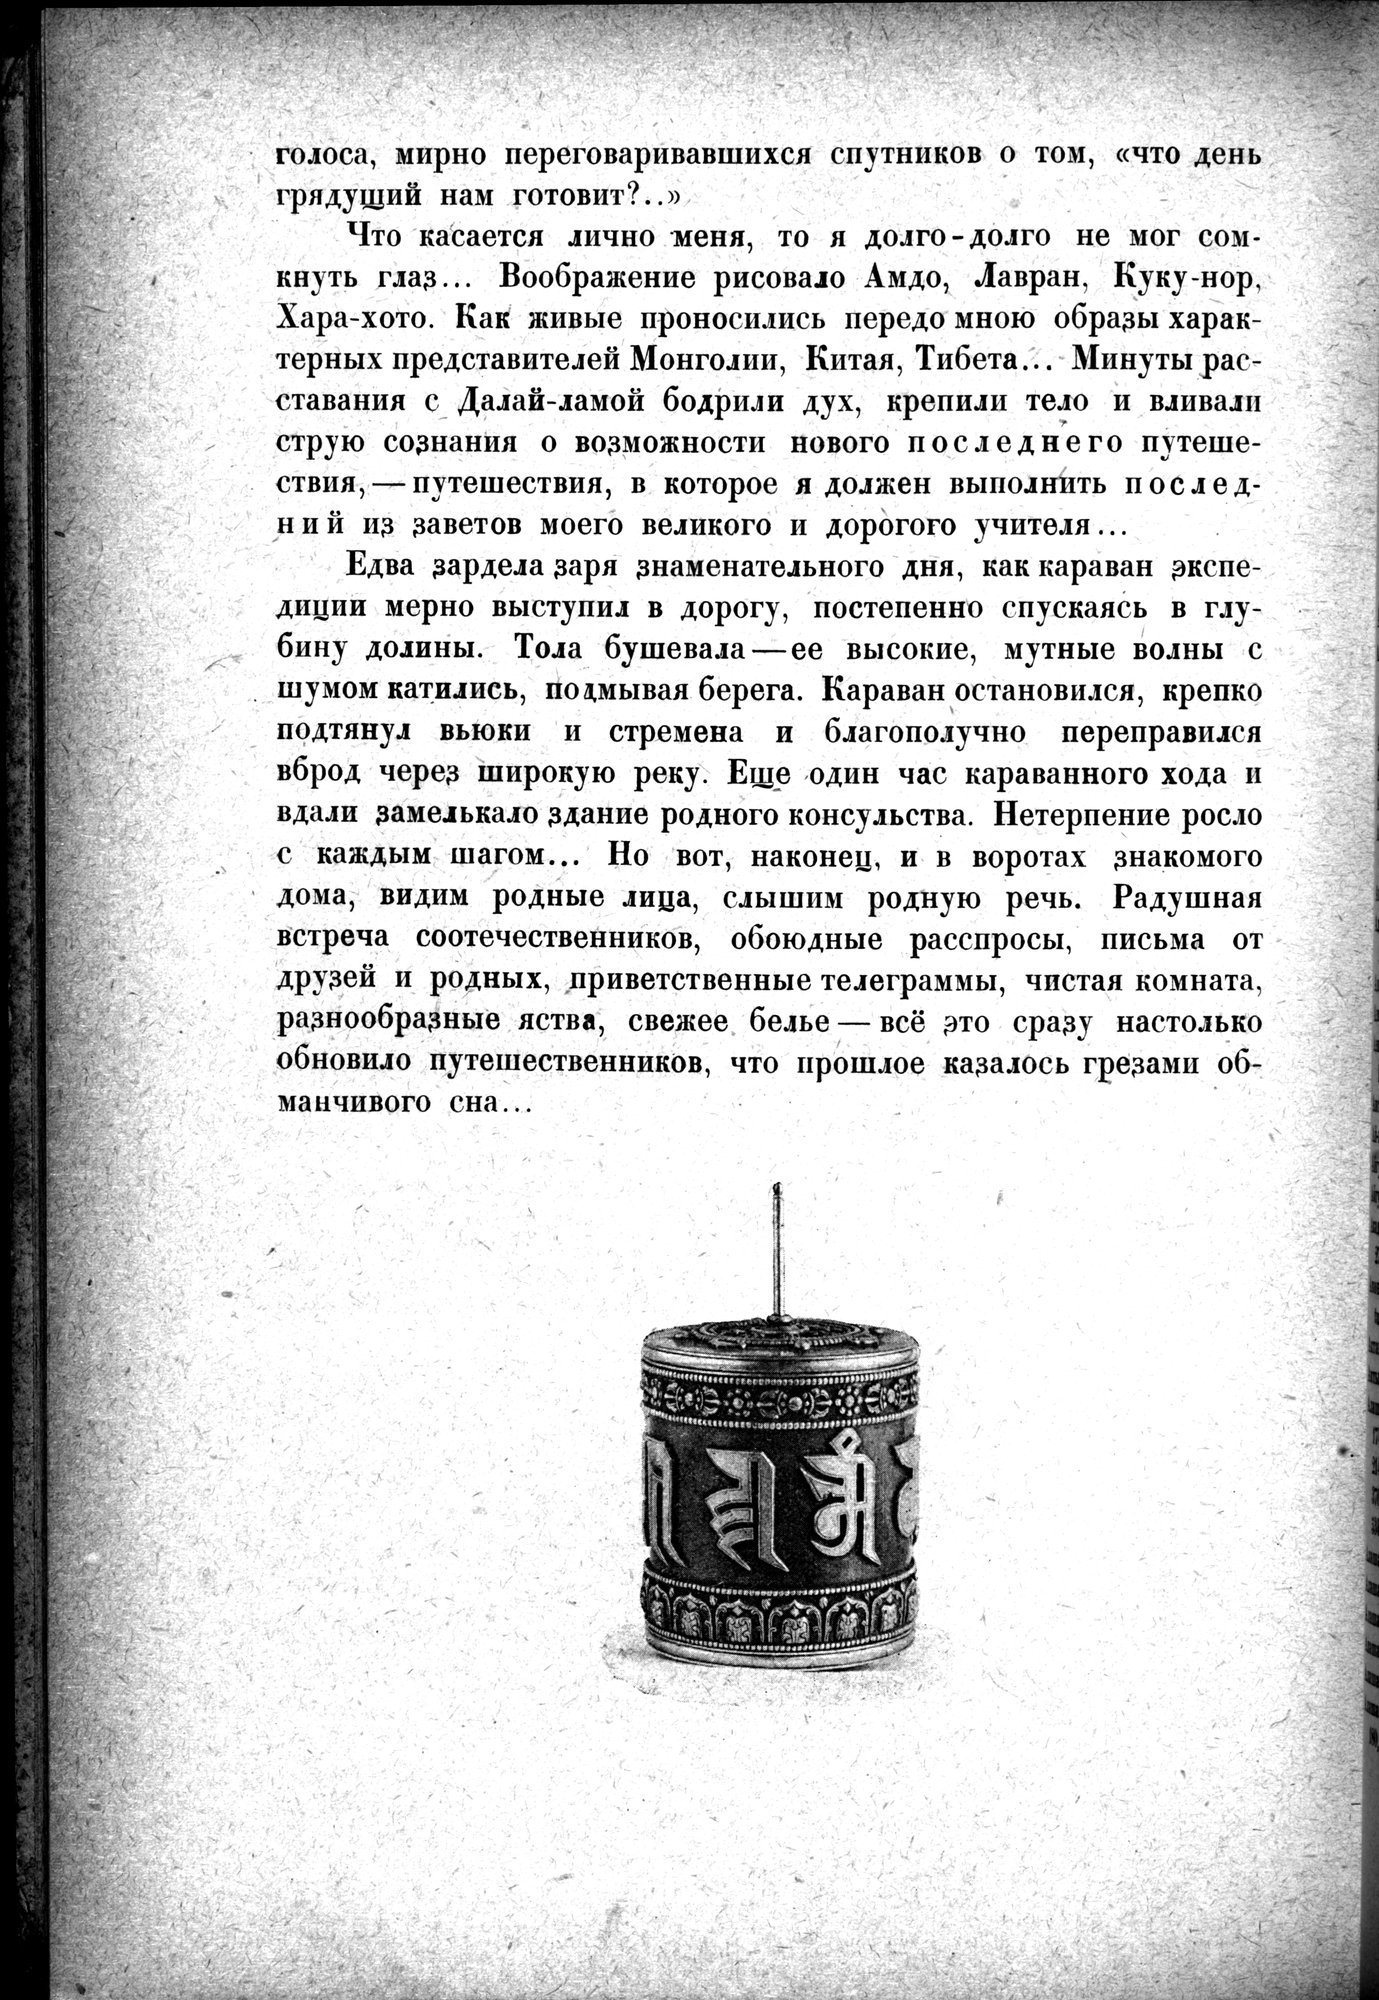 Mongoliya i Amdo i mertby gorod Khara-Khoto : vol.1 / Page 726 (Grayscale High Resolution Image)